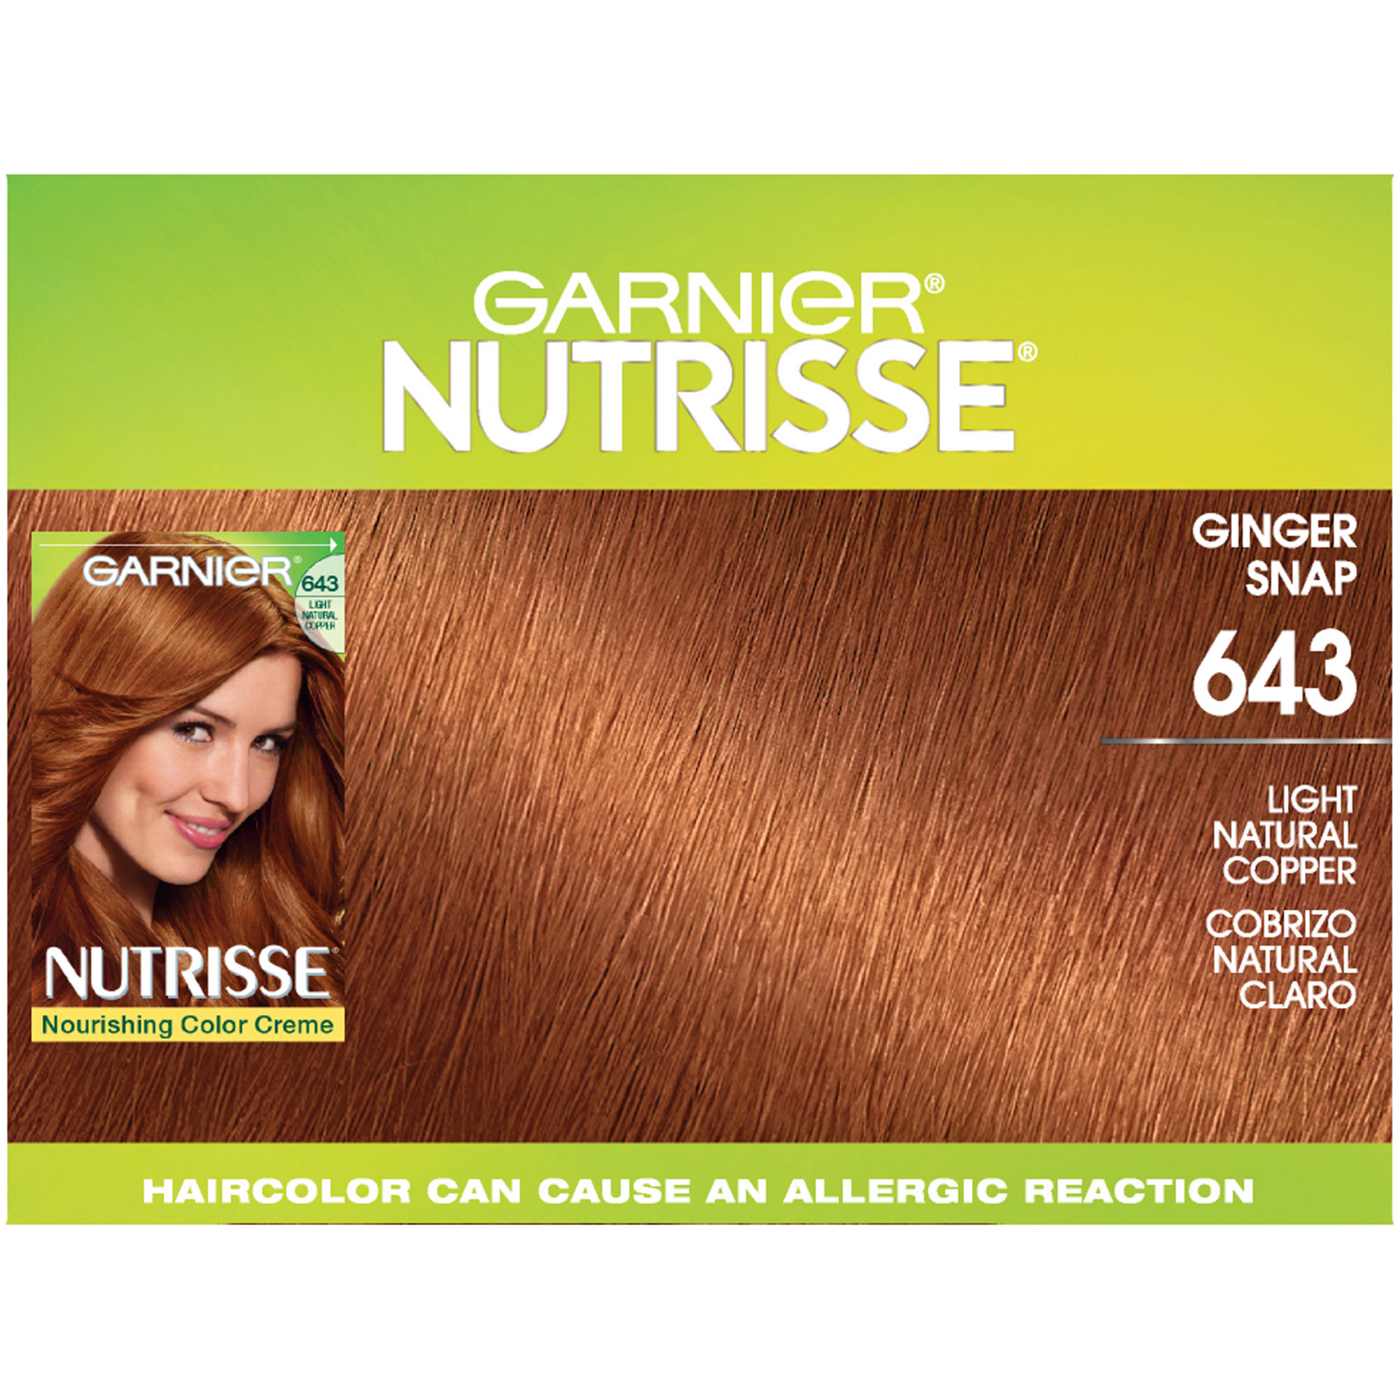 Garnier Nutrisse Nourishing Hair Color Creme with Triple Oils 643 Light Natural Copper; image 4 of 10